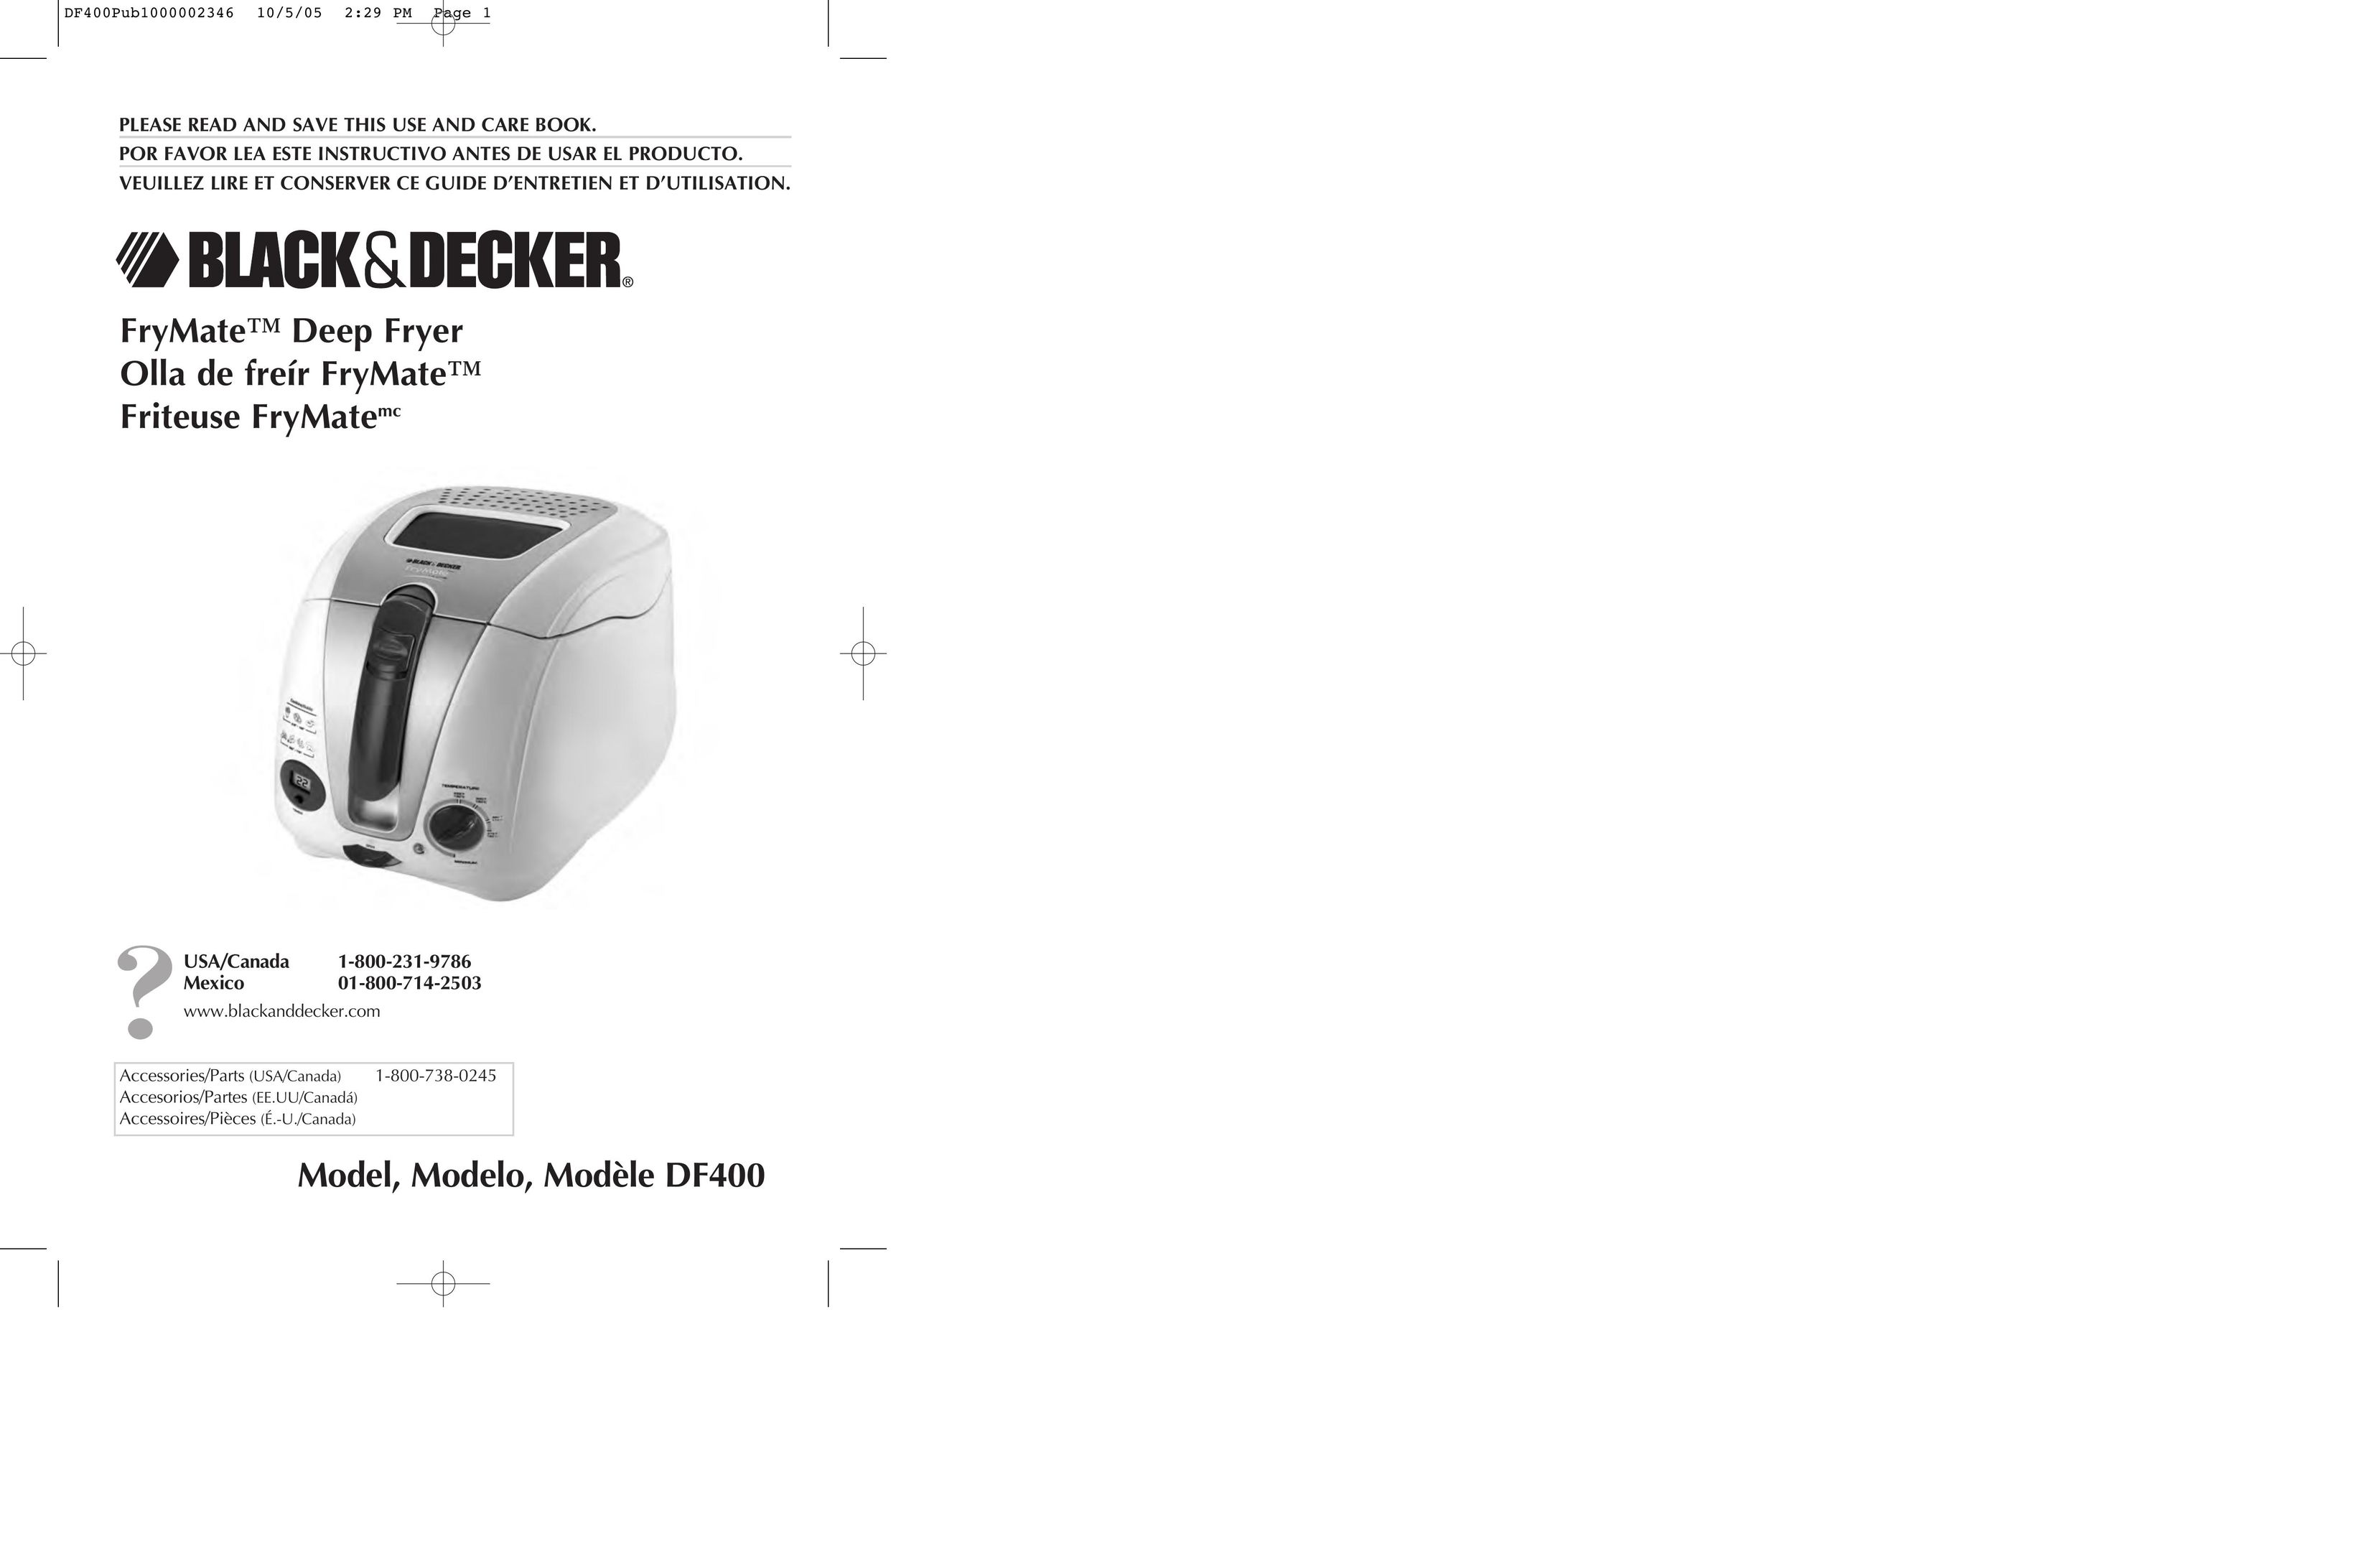 Black & Decker DF400 Fryer User Manual